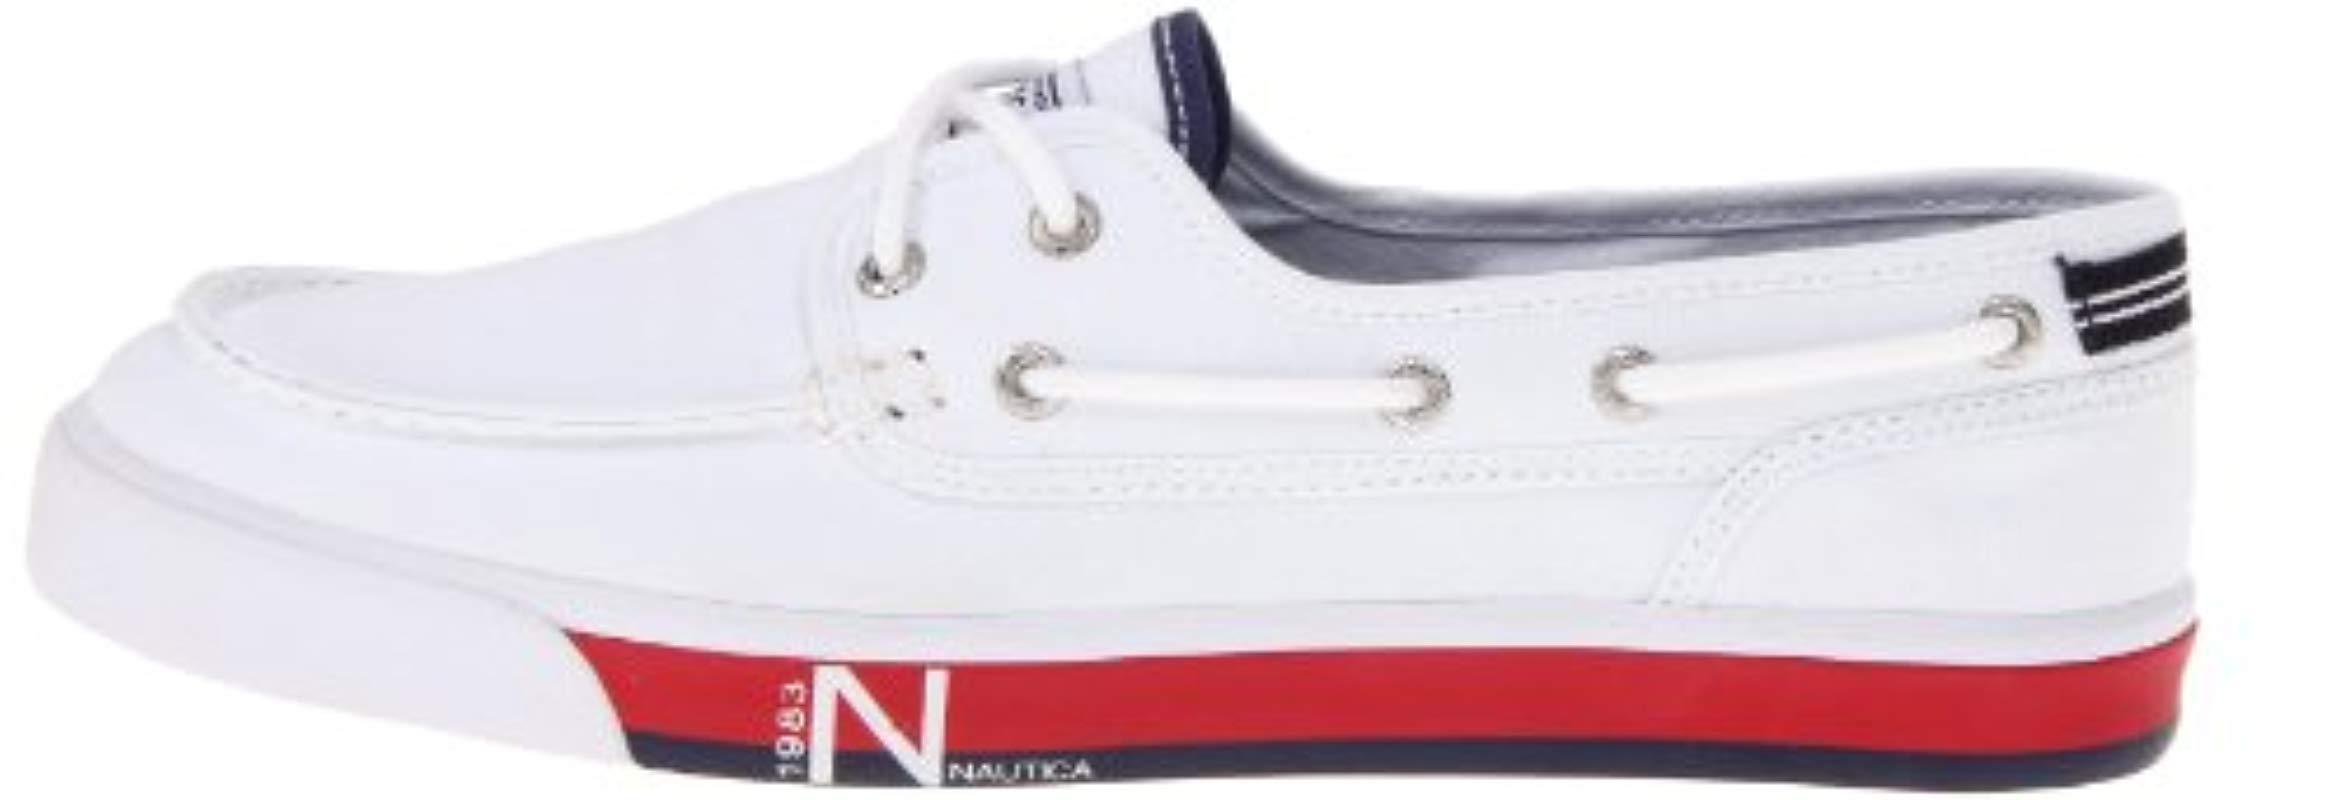 Nautica Spinnaker Canvas Shoe in White 